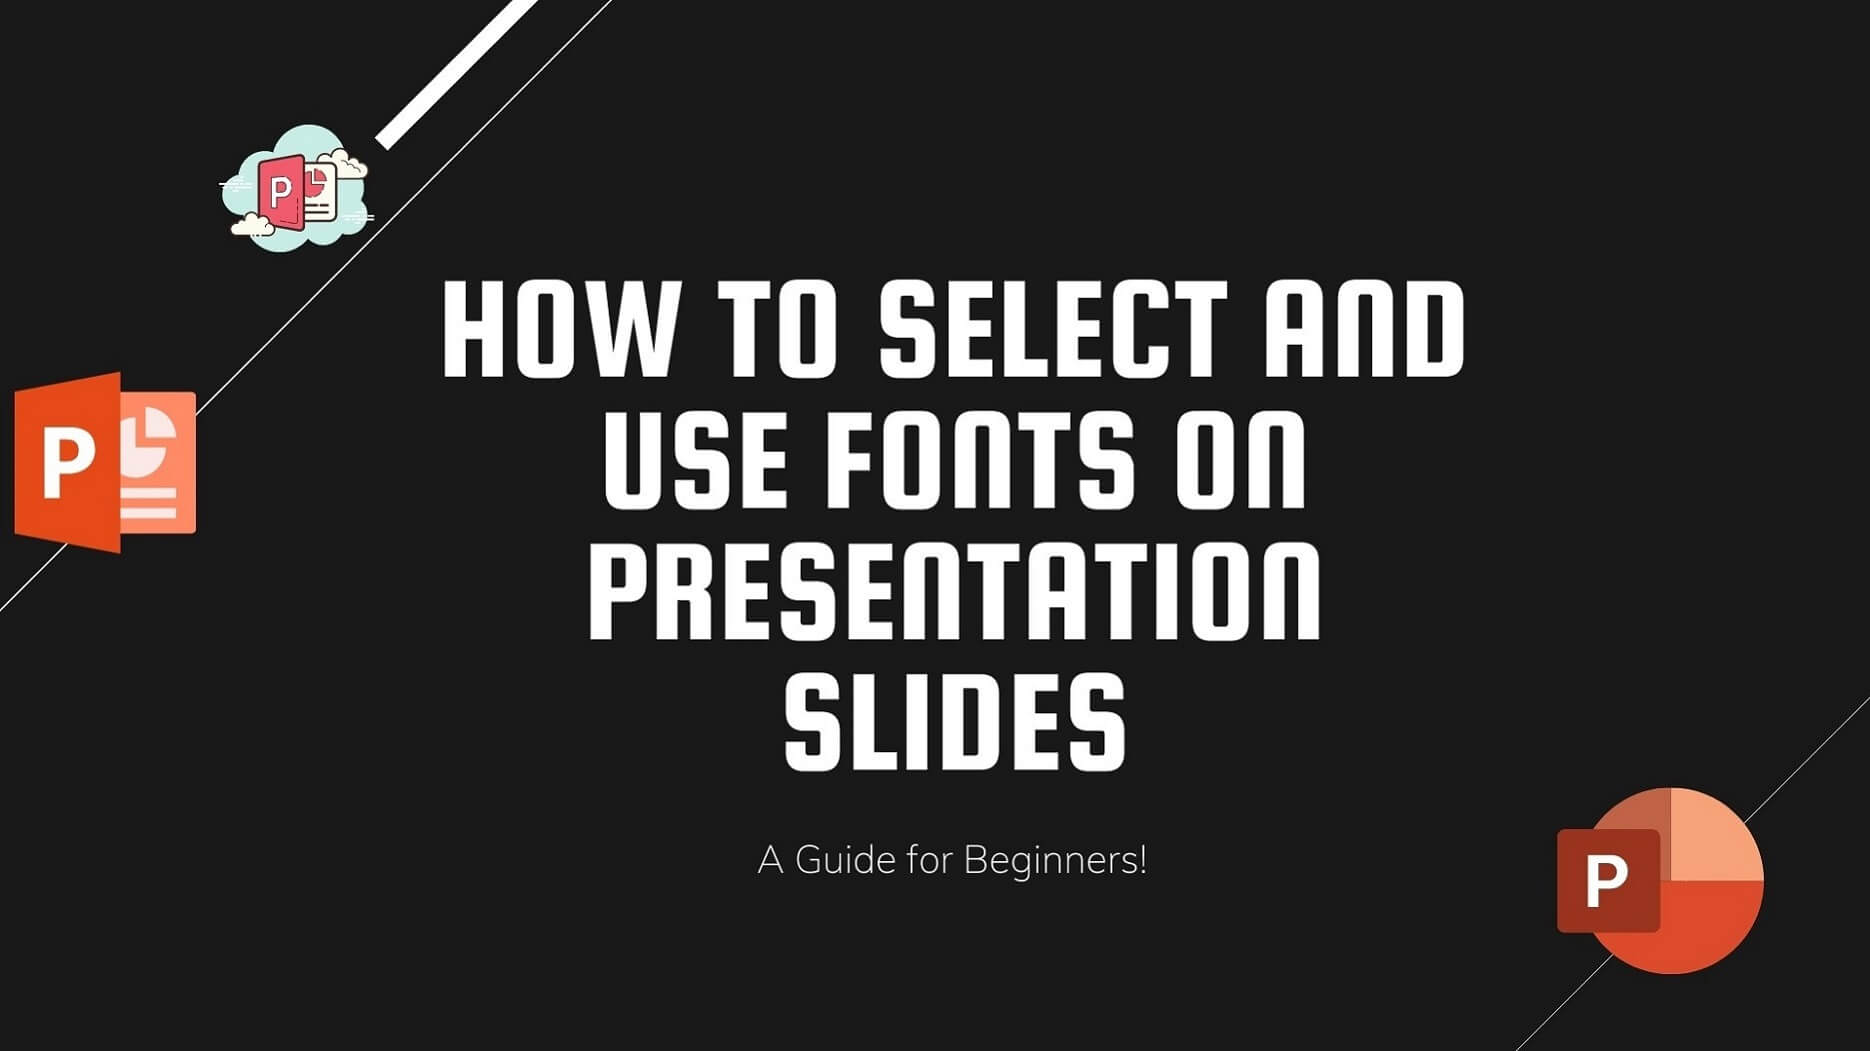 Select and Use Fonts on Presentation Slides